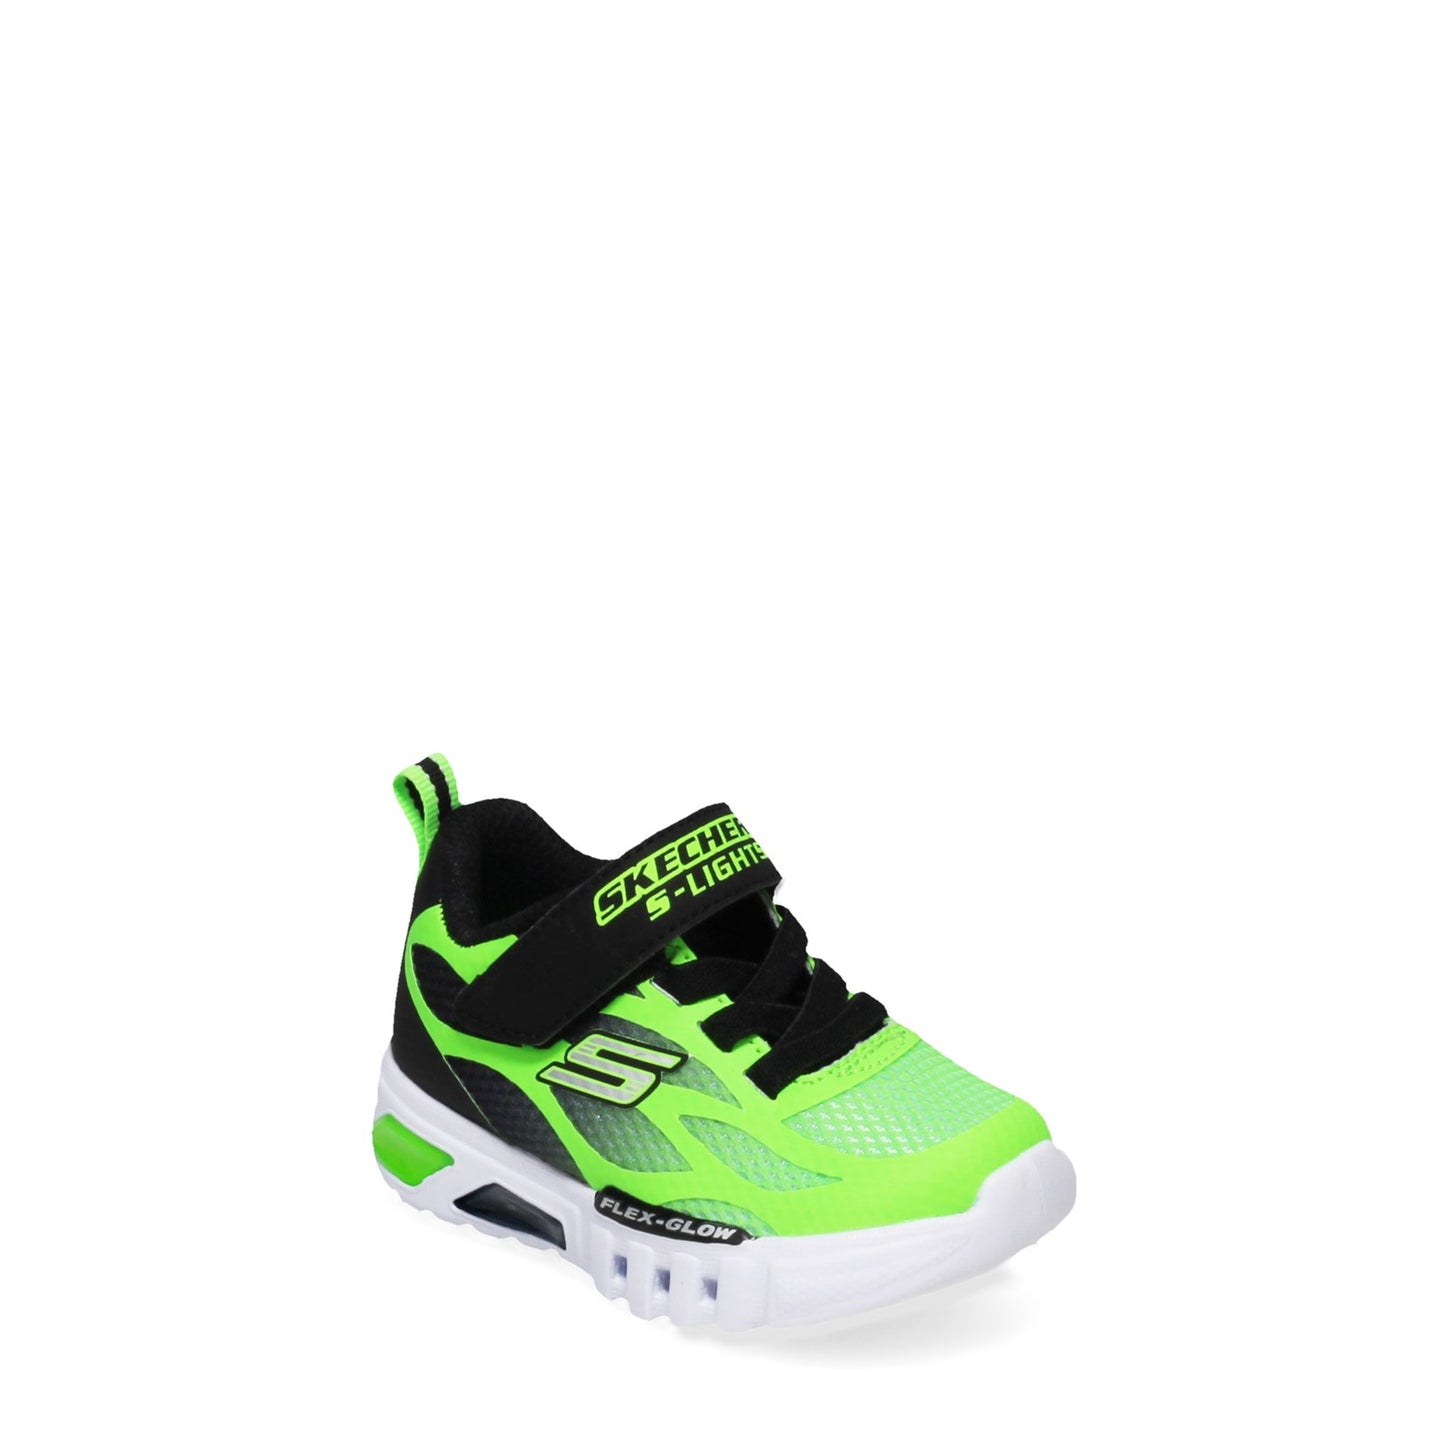 Peltz Shoes  Boy's Skechers S Lights Flex - Glow Sneaker - Toddler Lime/Black 400016N-LMBK